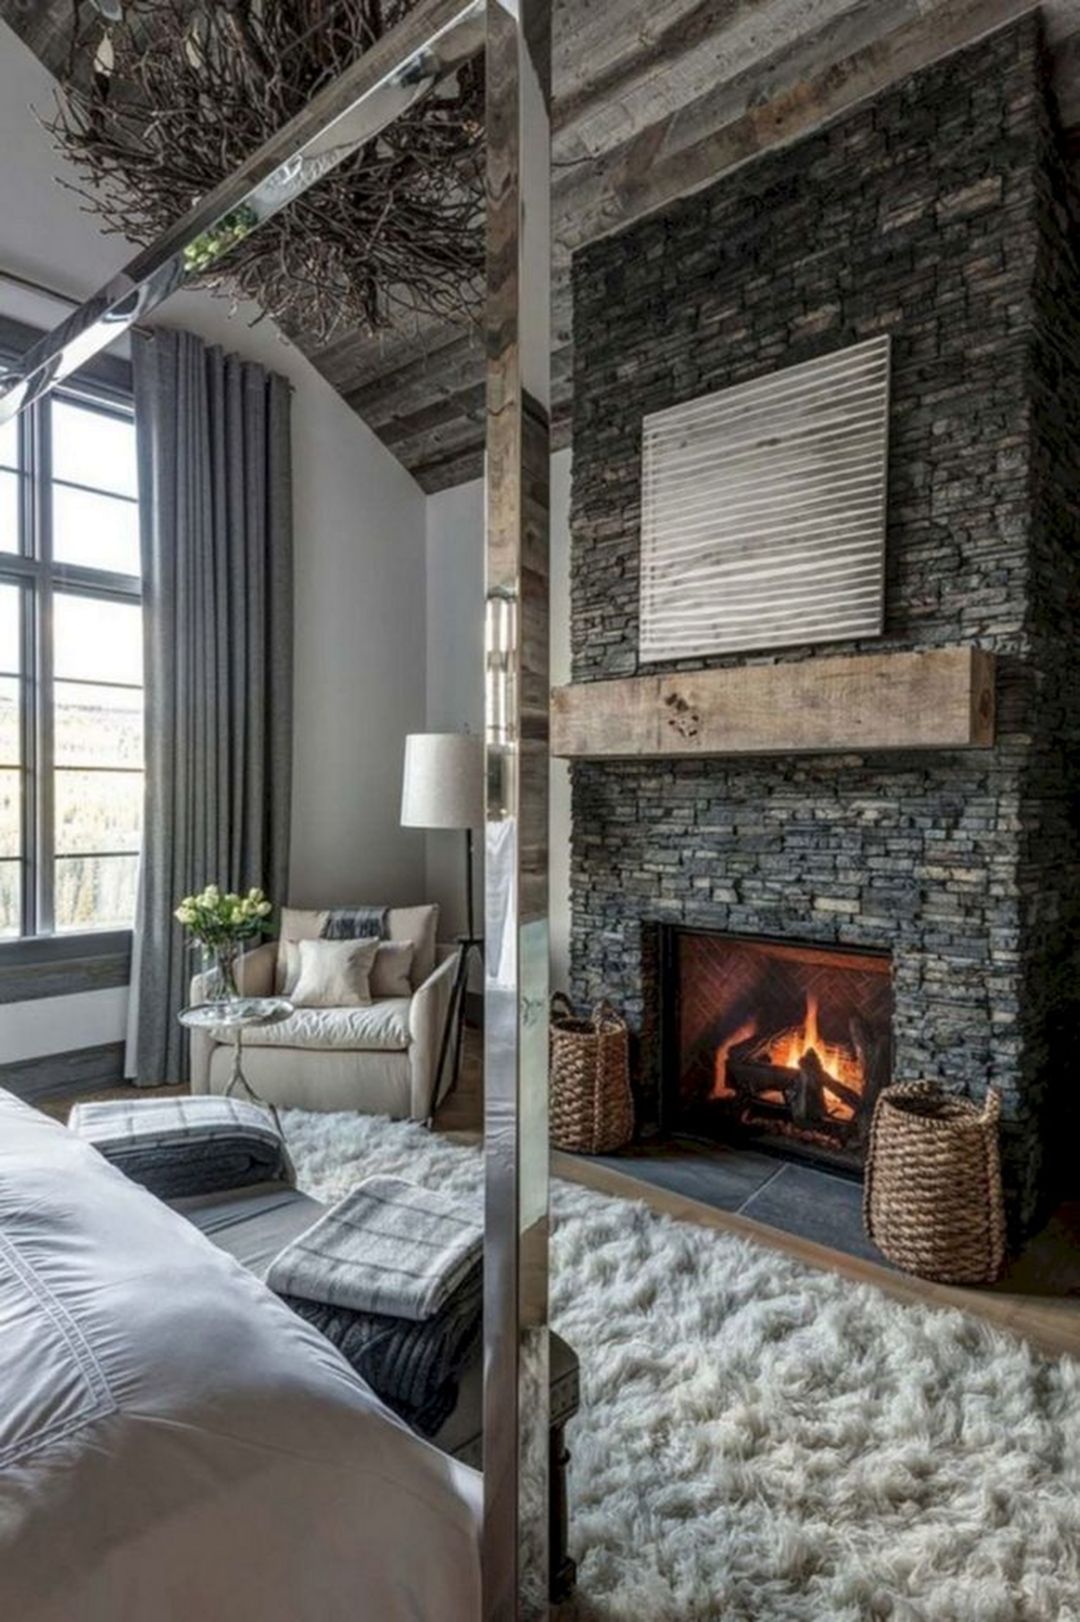 Cozy Winter Interior Design Ideas